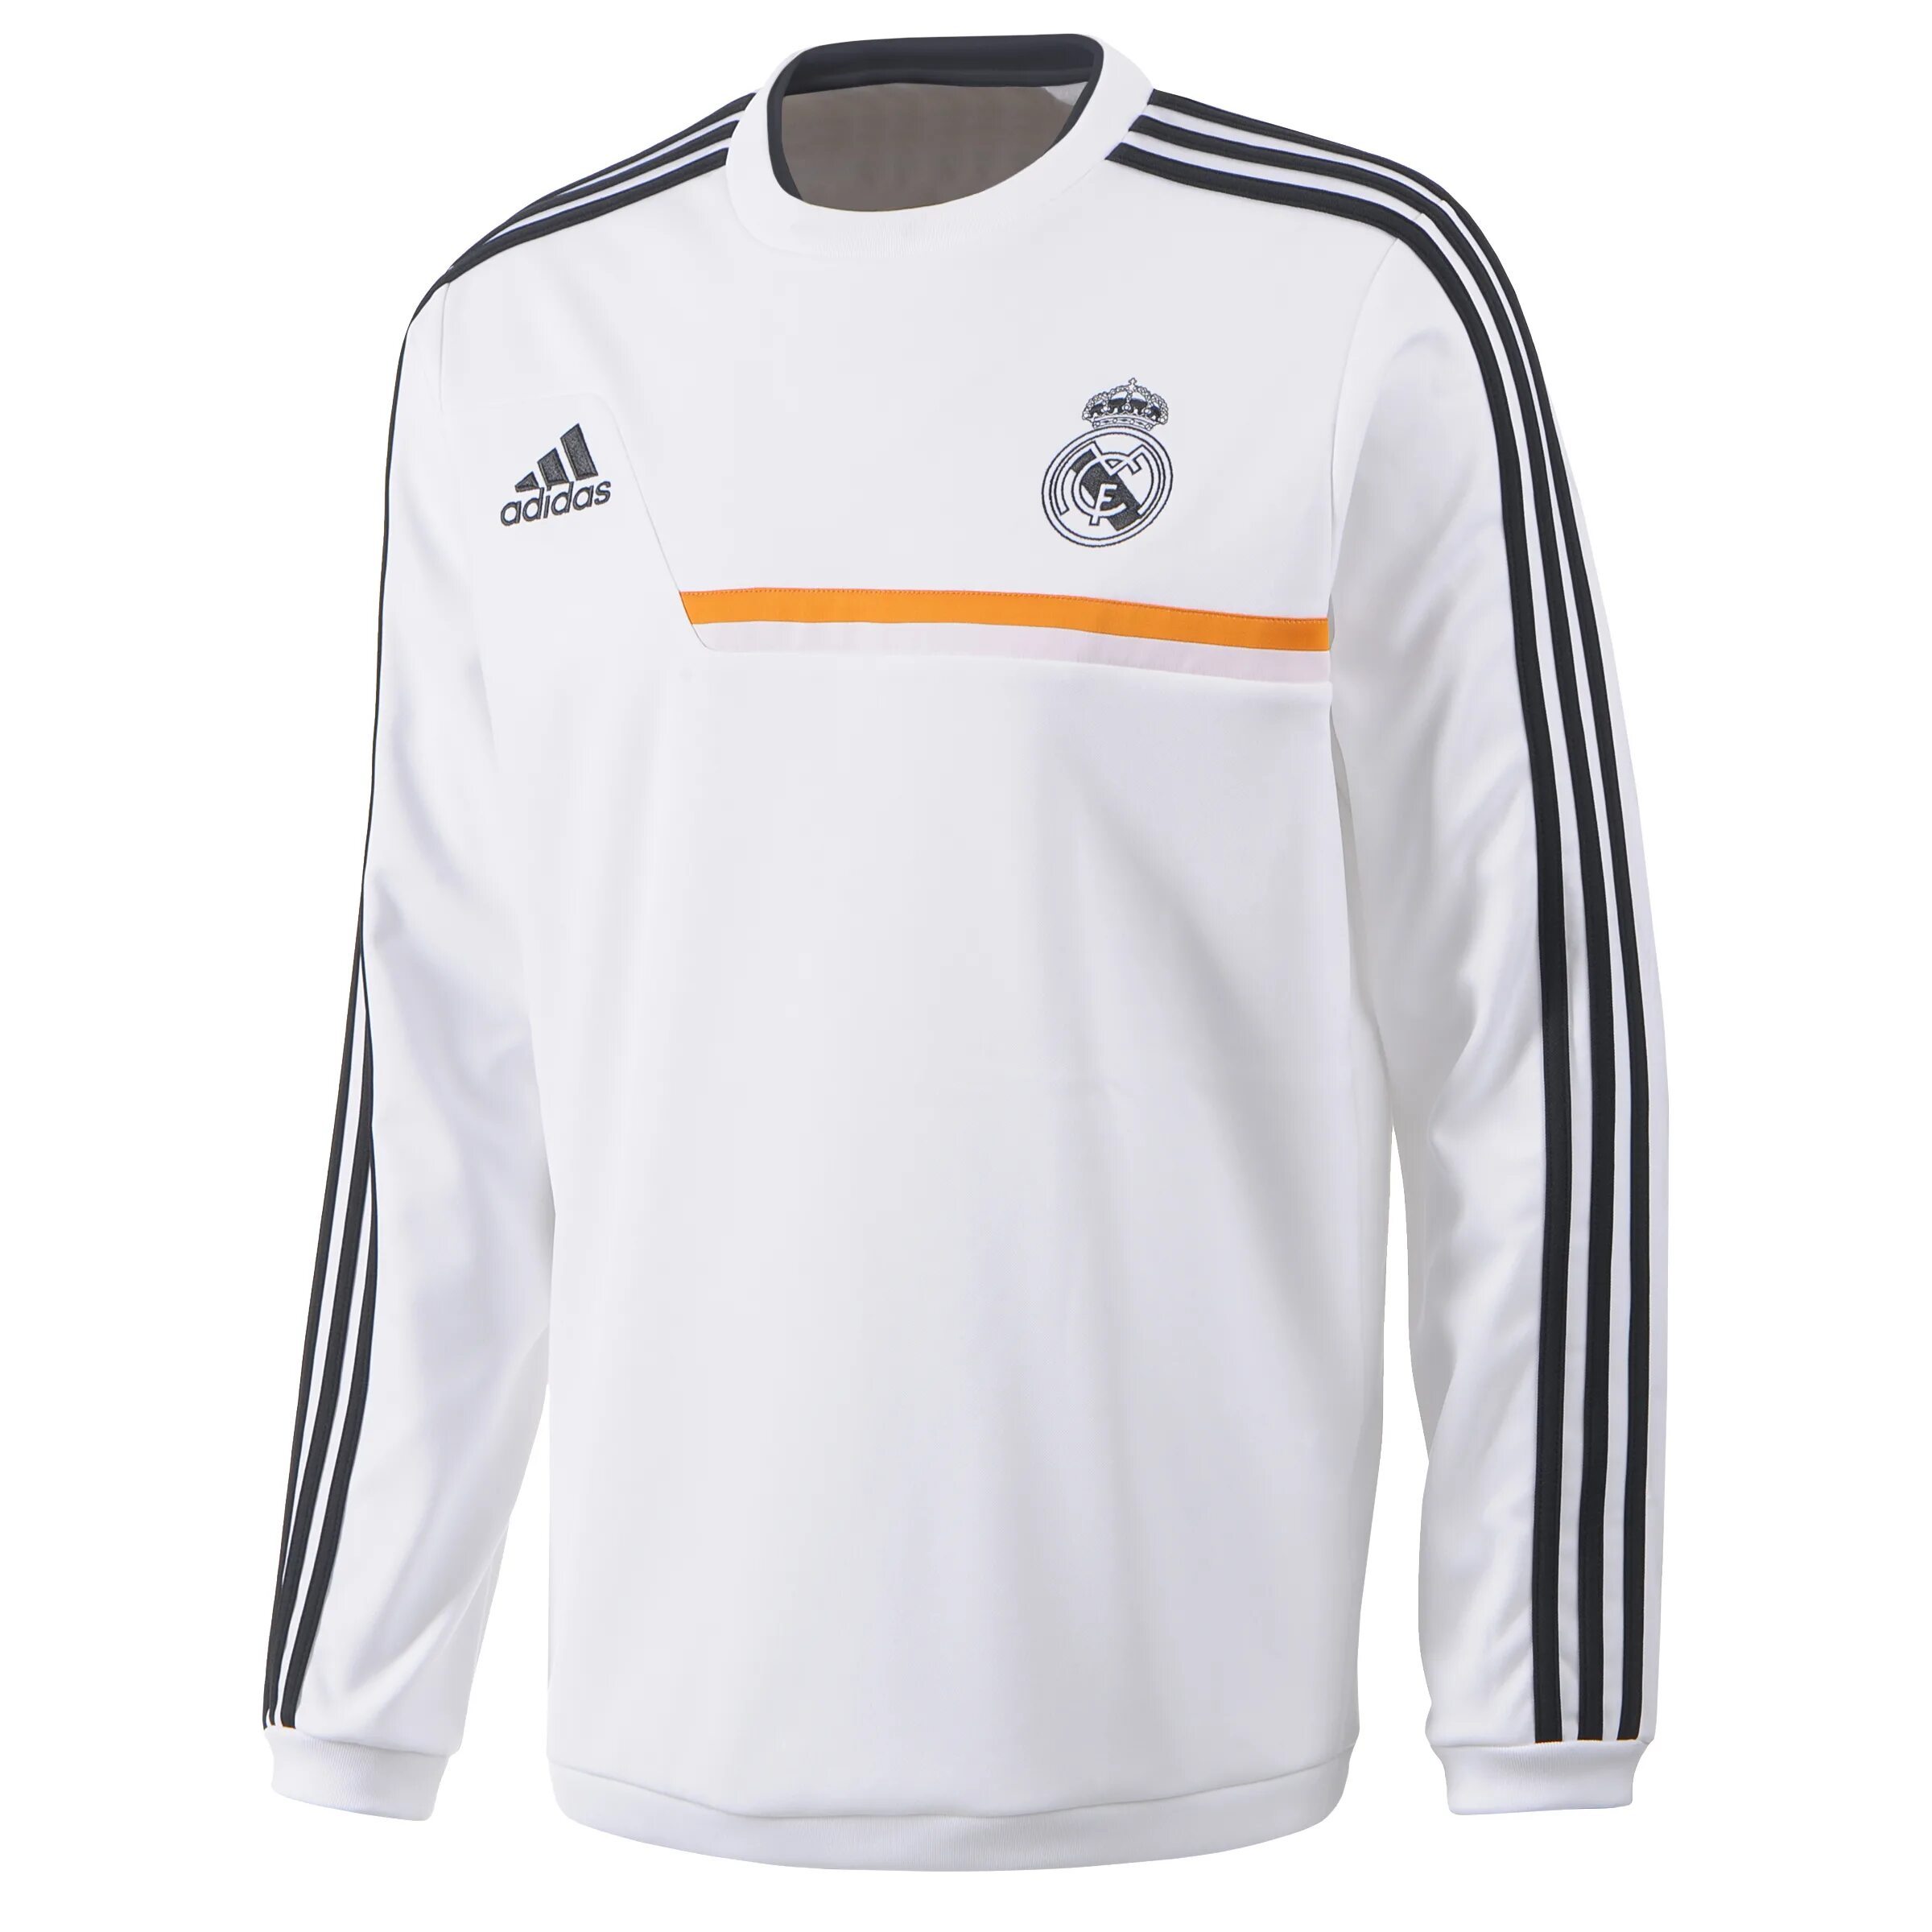 Adidas real Madrid кофта белая. Кофта Реал Мадрид адидас белая. Кофта Реал Мадрид адидас тренировочная. Олимпийка адидас Реал. Адидас сборная германии